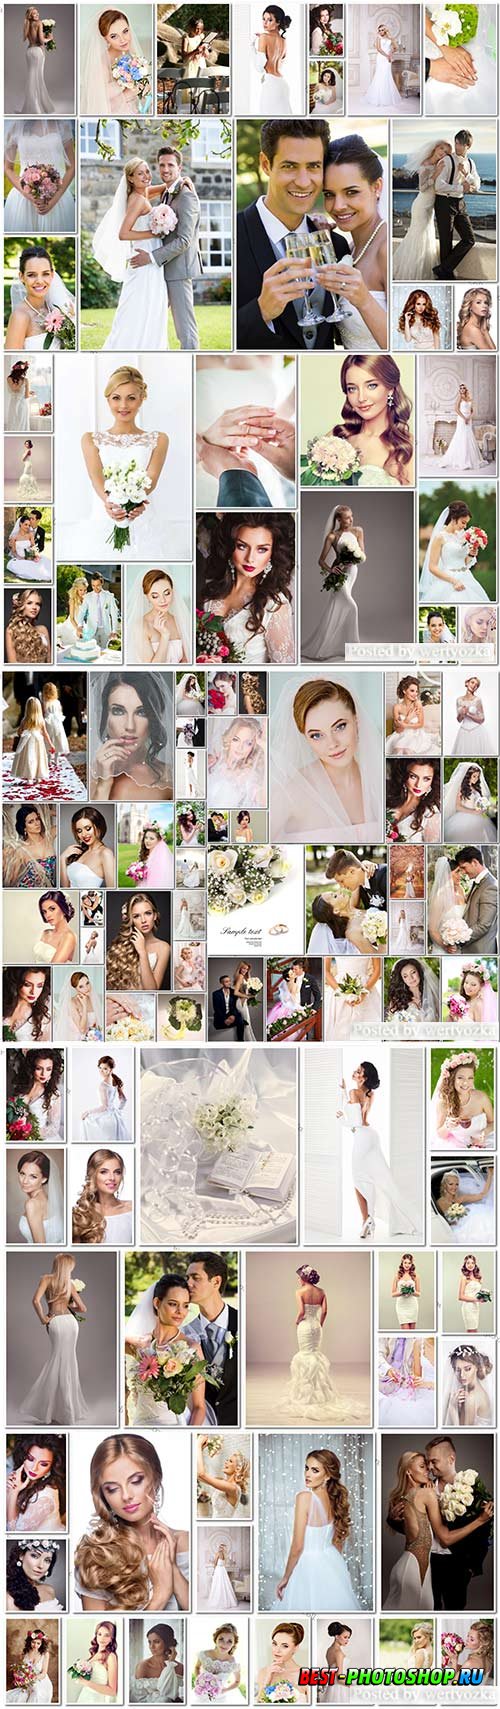 100 Bundle beautiful bride and groom, wedding stock photo vol 2